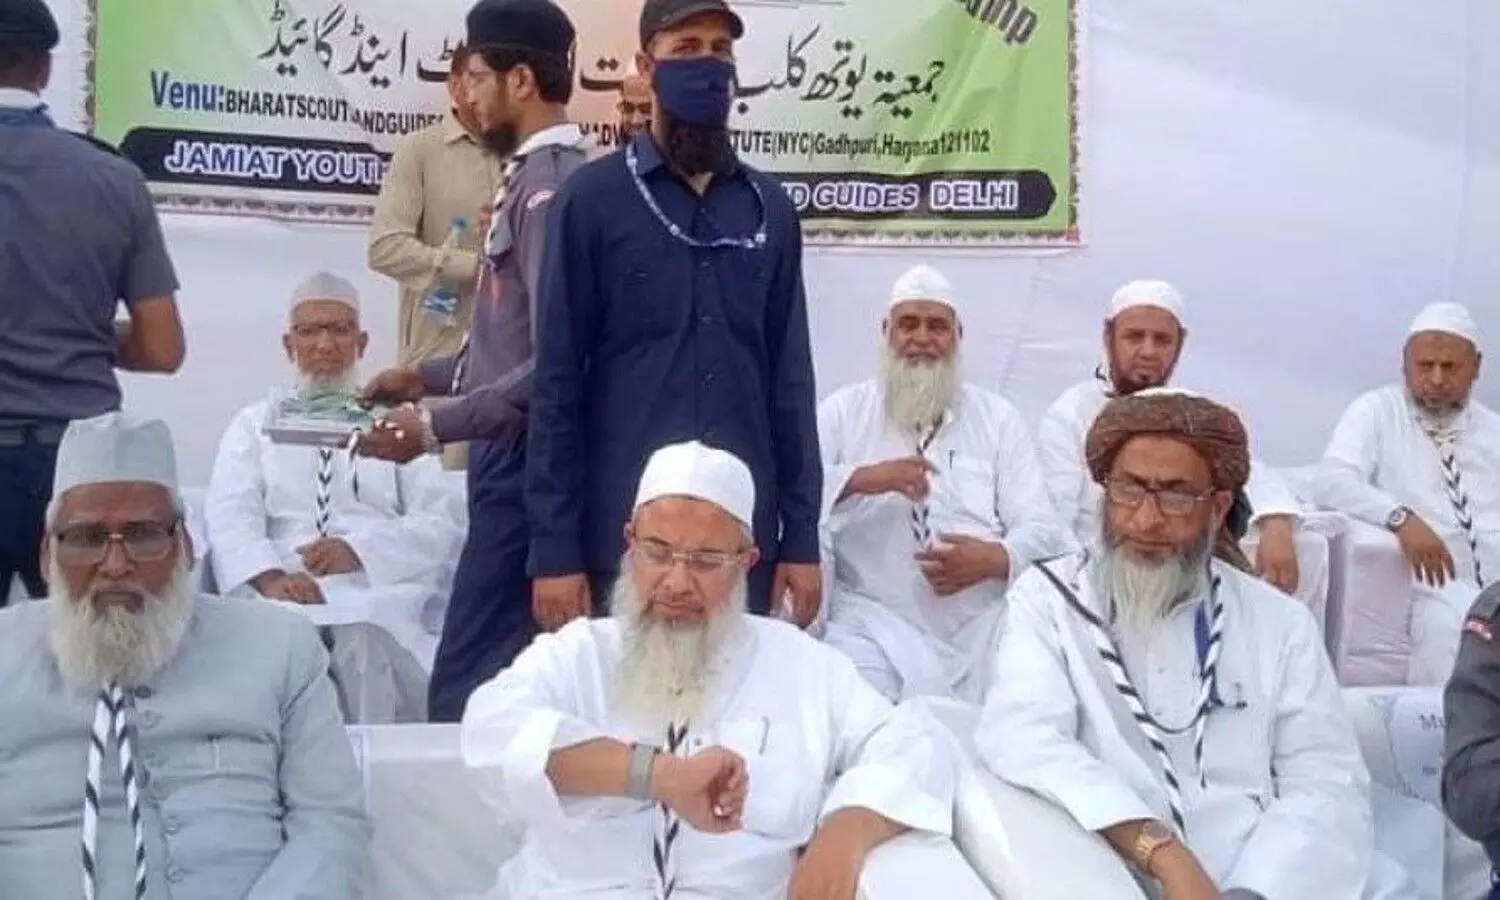 Muslim organization Jamiat Ulema-e-Hind